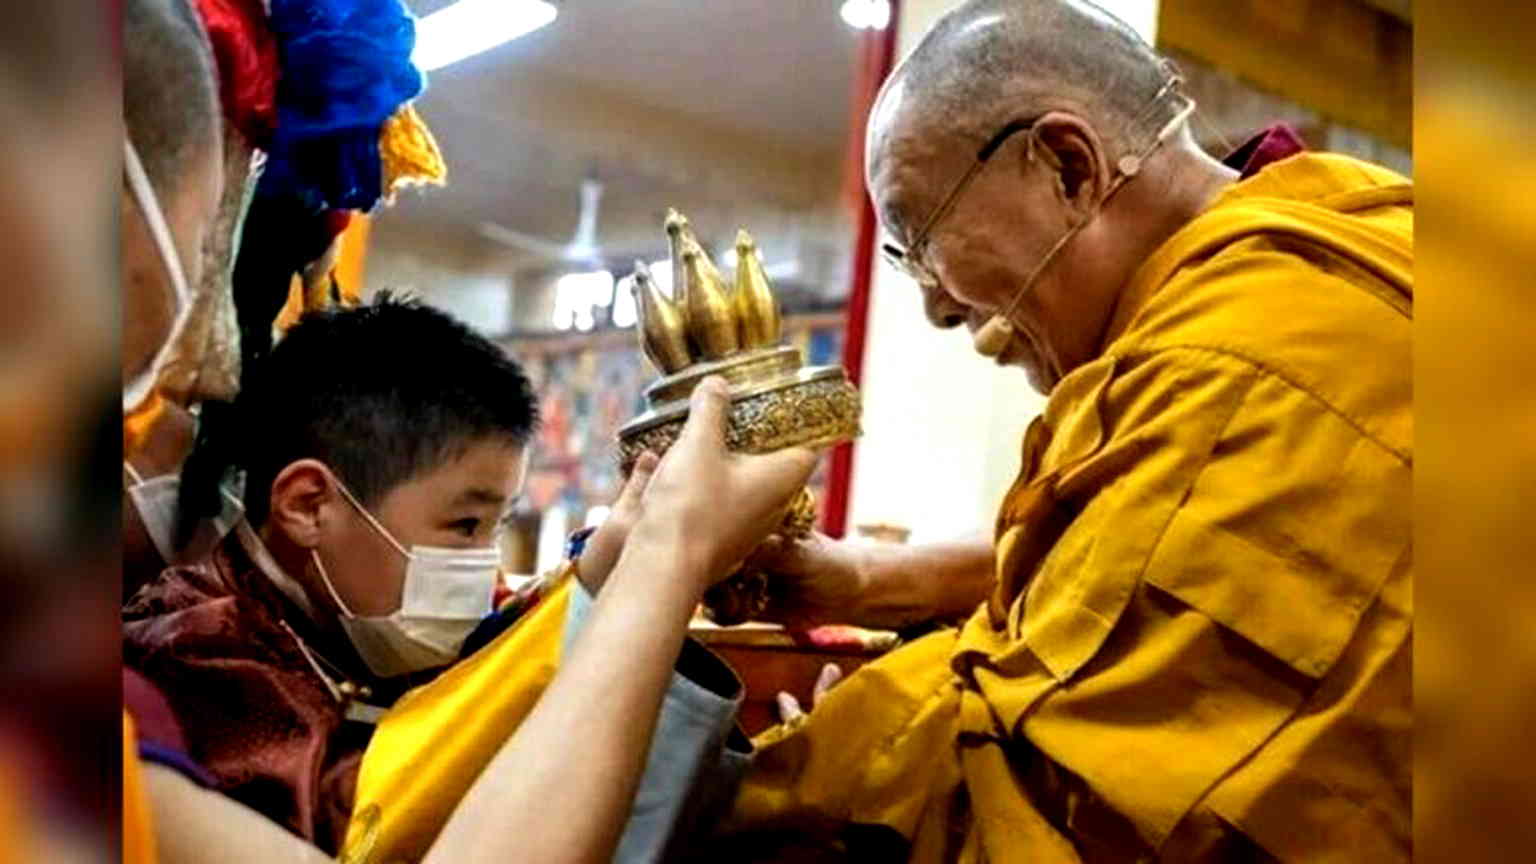 Dalai Lama names US-born Mongolian boy as reincarnation of Buddhist leader